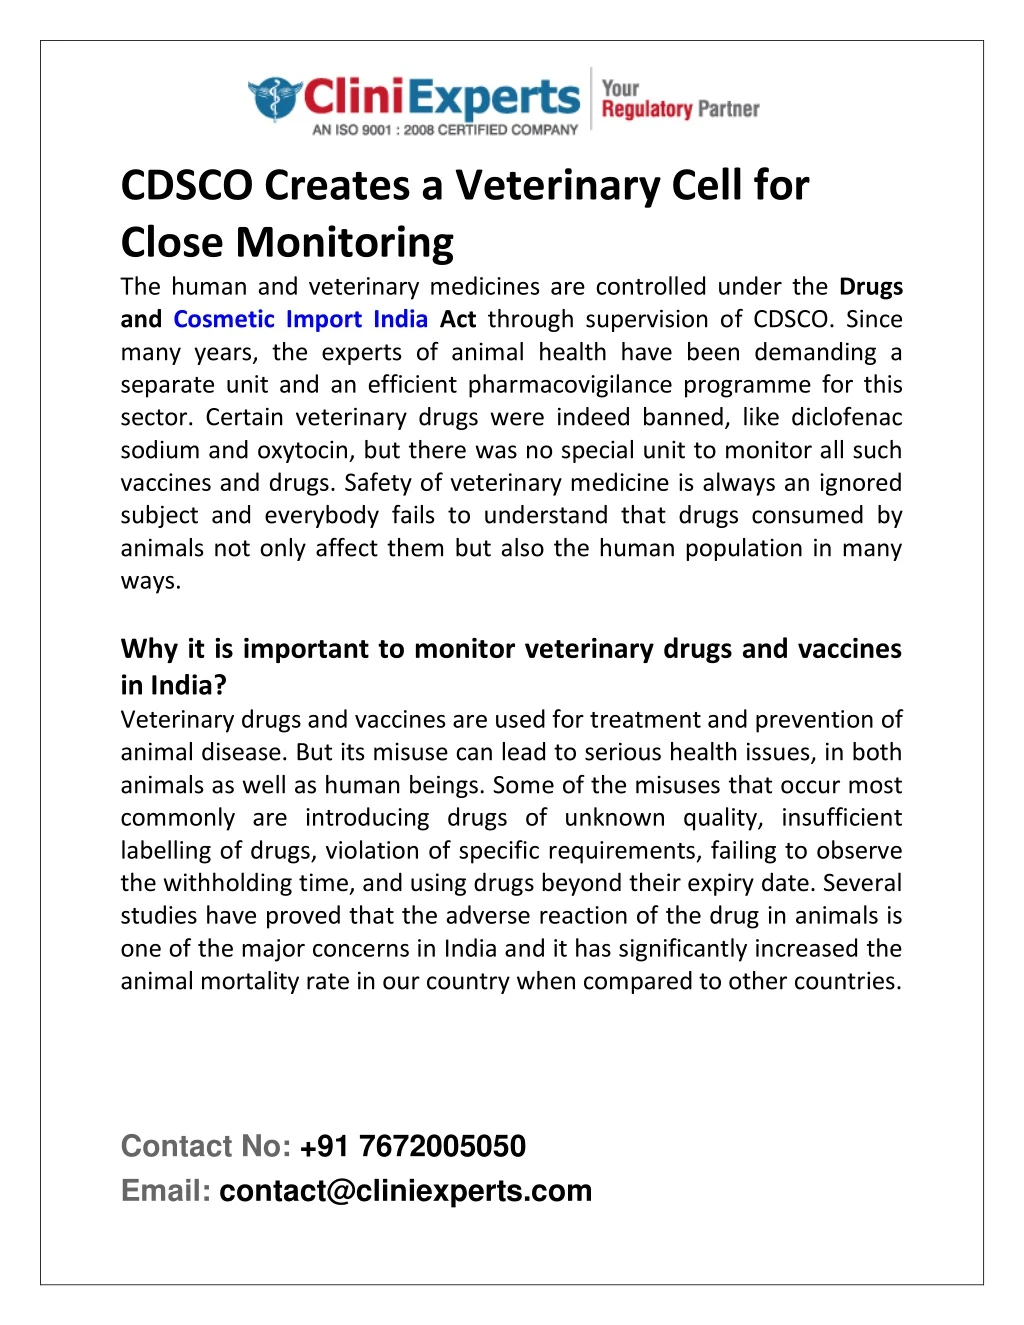 cdsco creates a veterinary cell for close